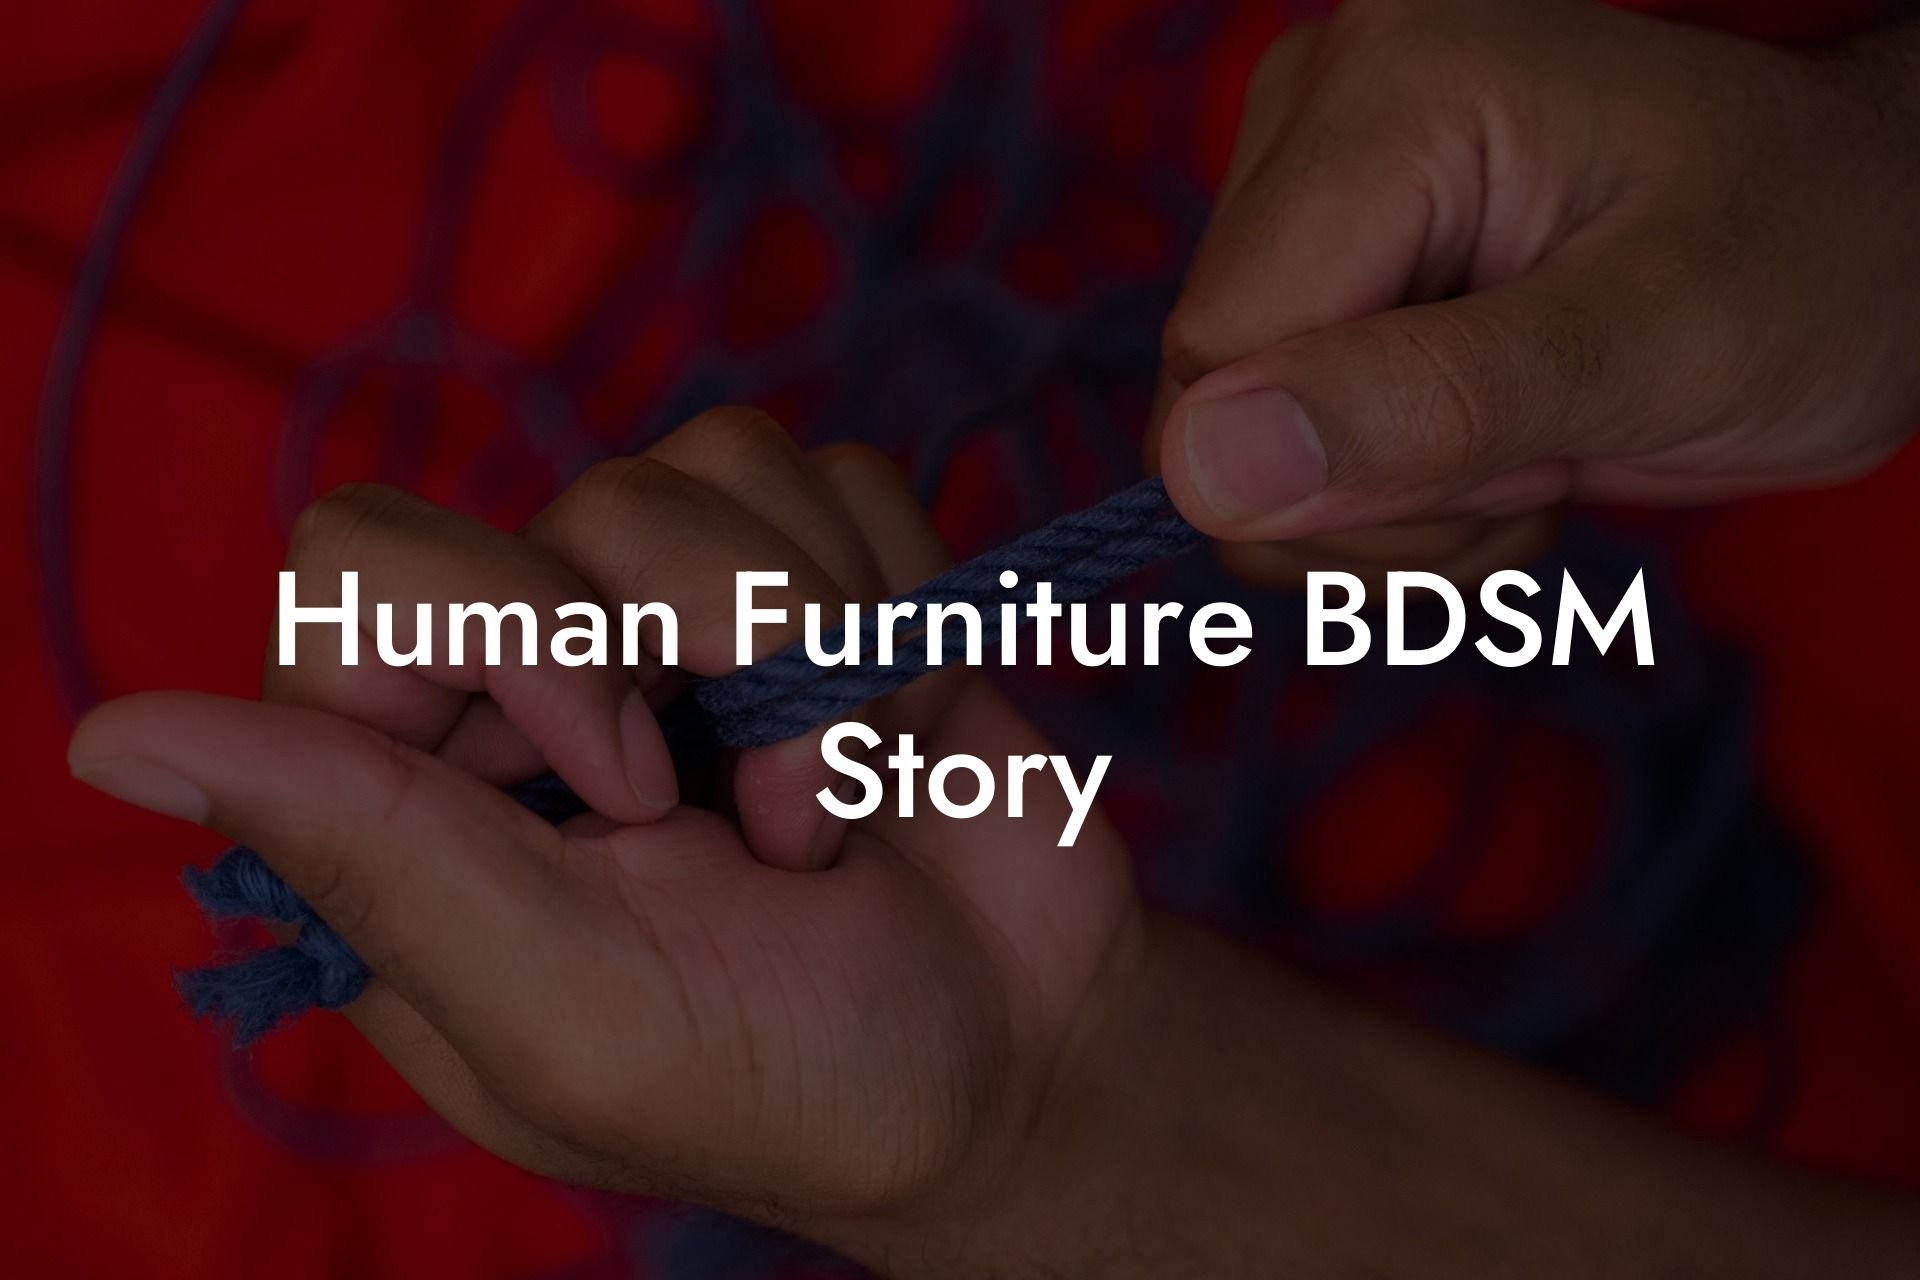 Human Furniture BDSM Story